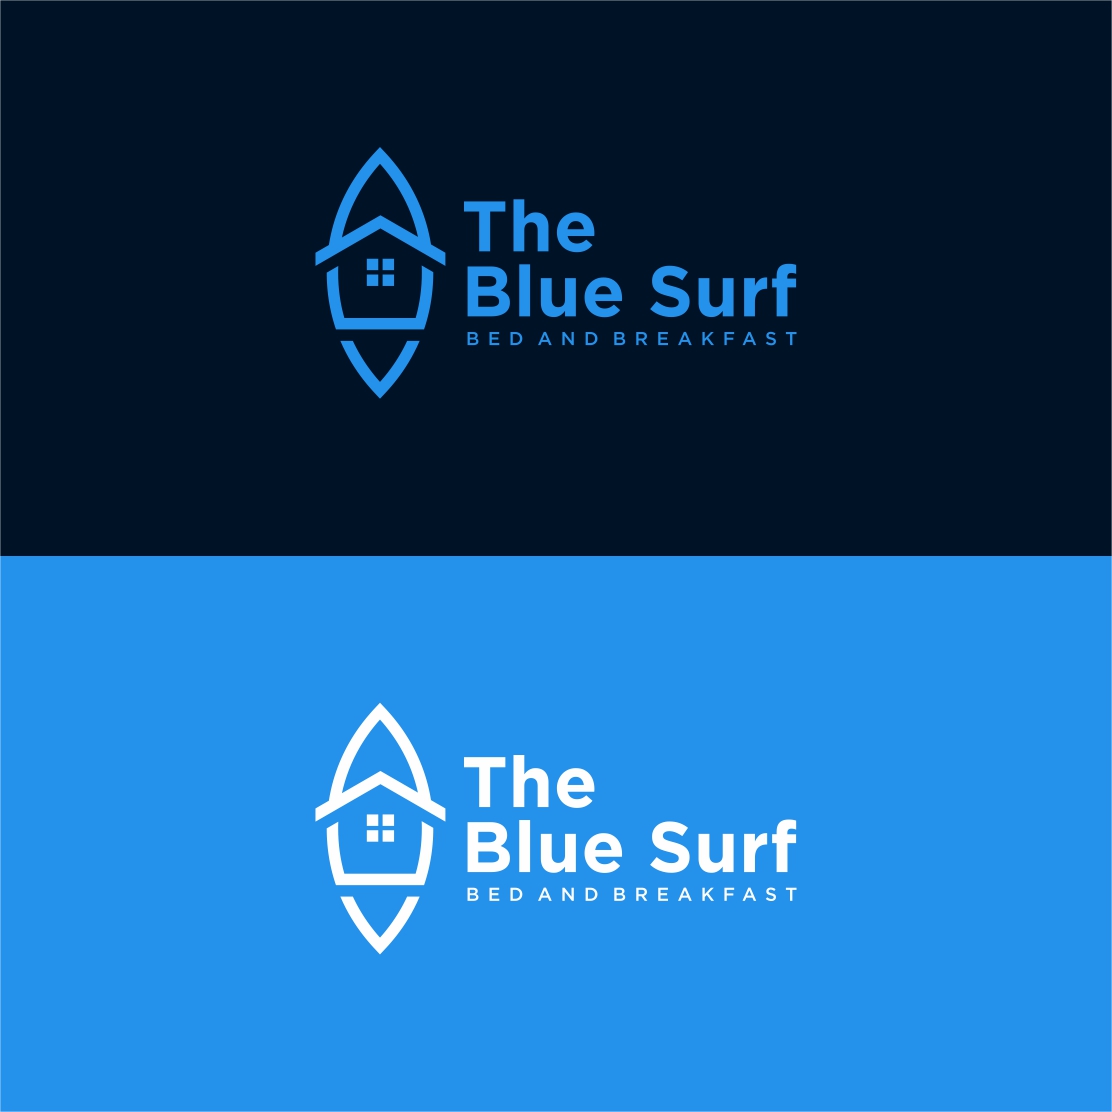 Surf House Logo Beachfront restaurant design illustration - only 8$ preview image.